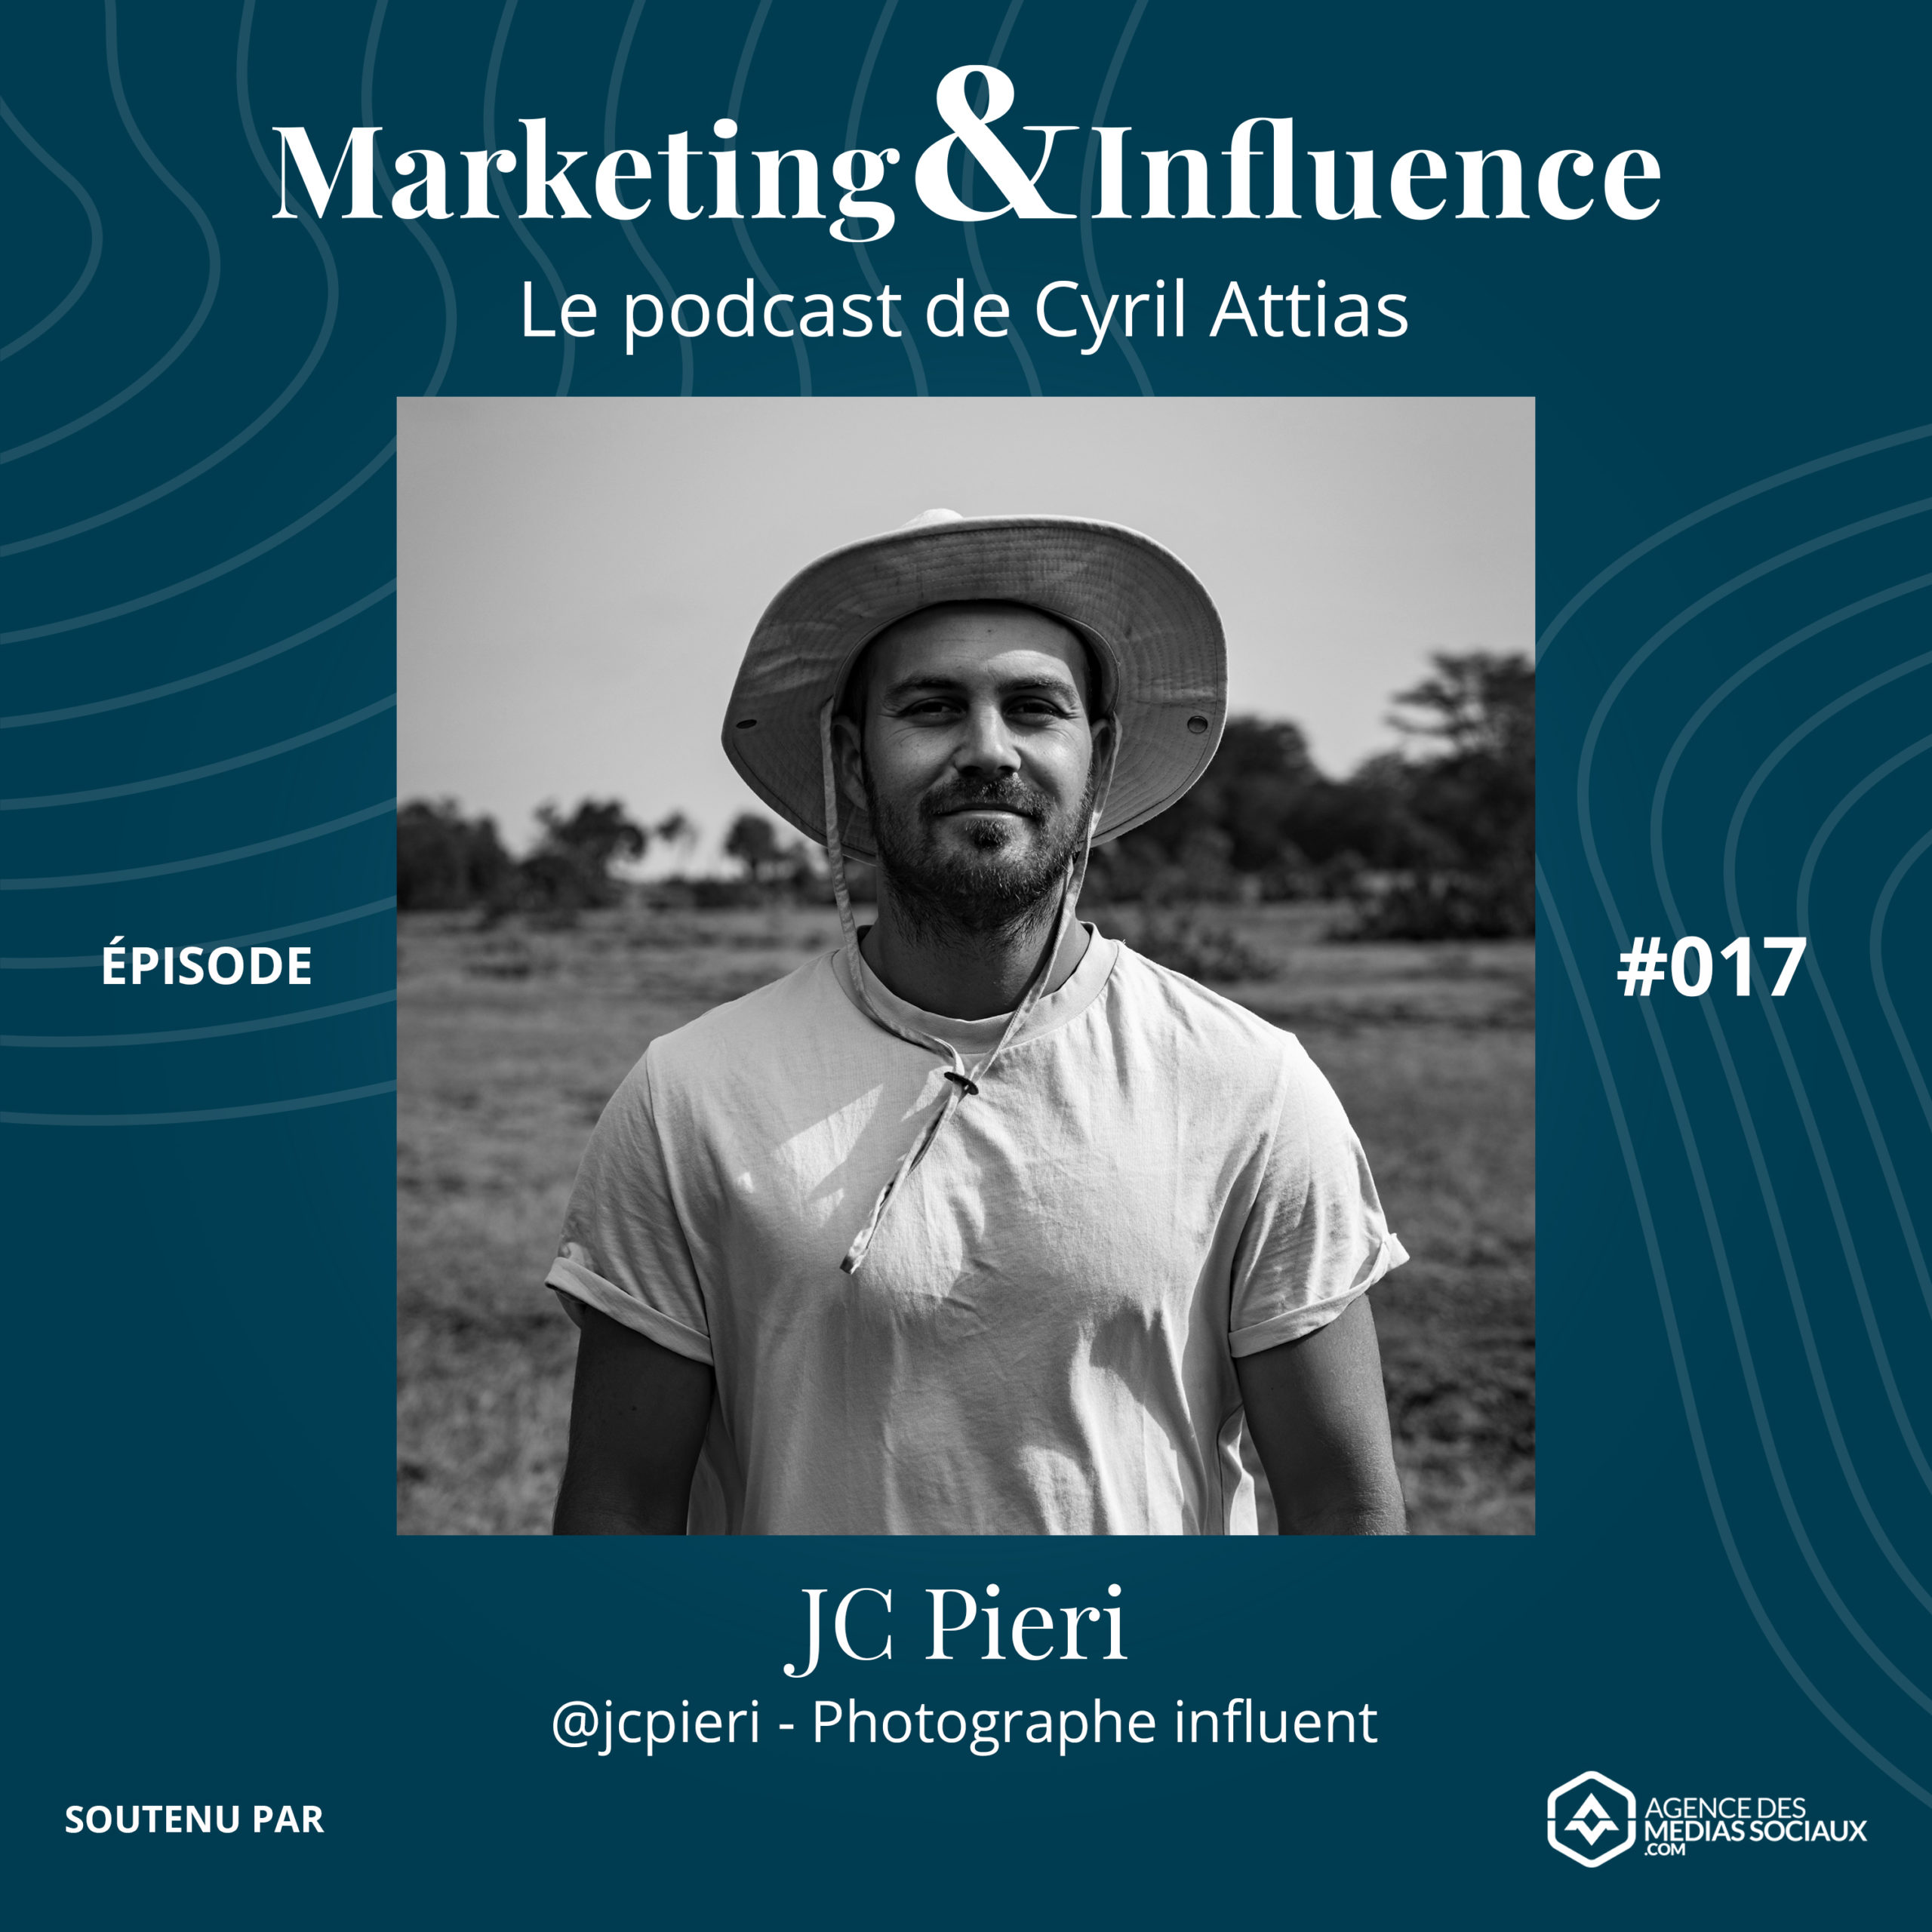 Episode-JC-Pieri-influenceur-photographe-podcast-cyril-attias-marketing-influence